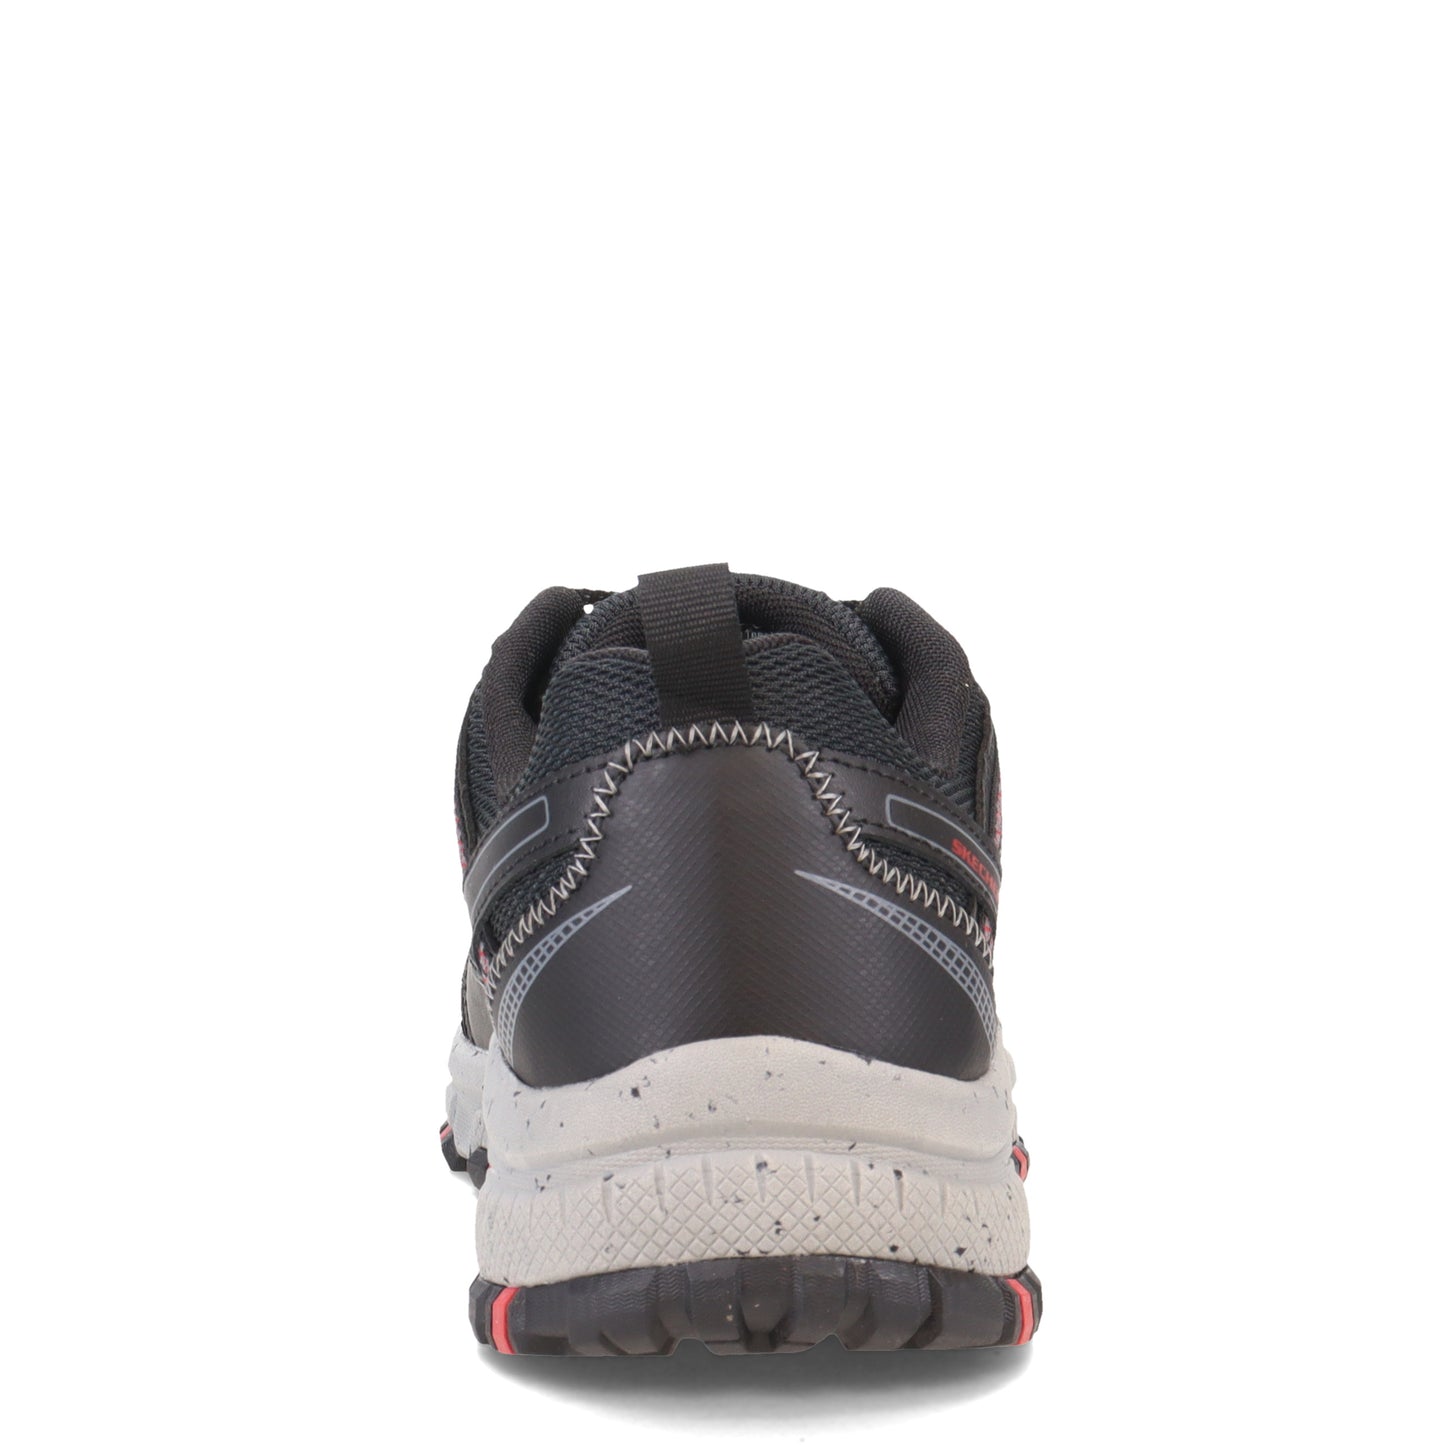 Peltz Shoes  Men's Skechers Hillcrest - Vast Adventure Walking Shoe Black/Red 237266-BKRD